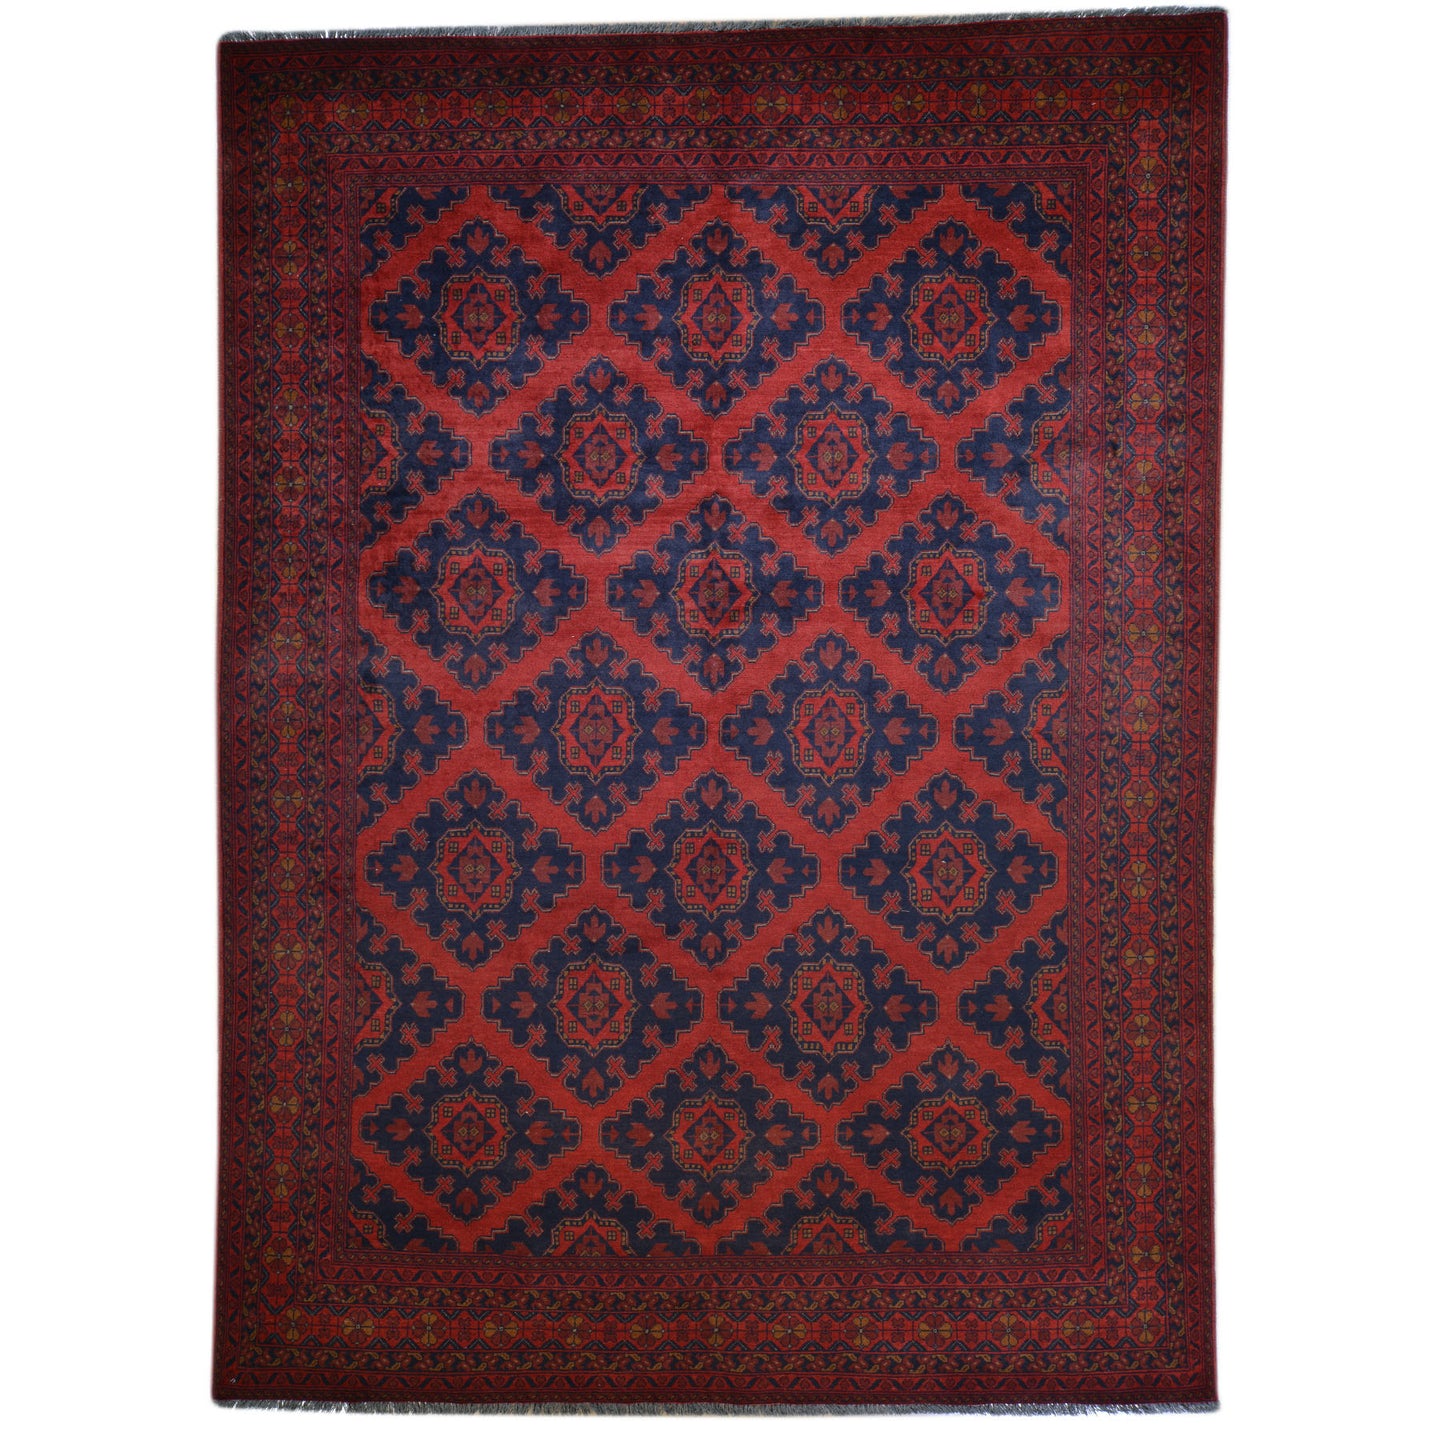 Albuquerque Rugs, Oriental Rugs, ABQ Rugs, Handmade Rugs, Santa Fe Rugs, Carpets, Area Rugs, Rugs, Flooring